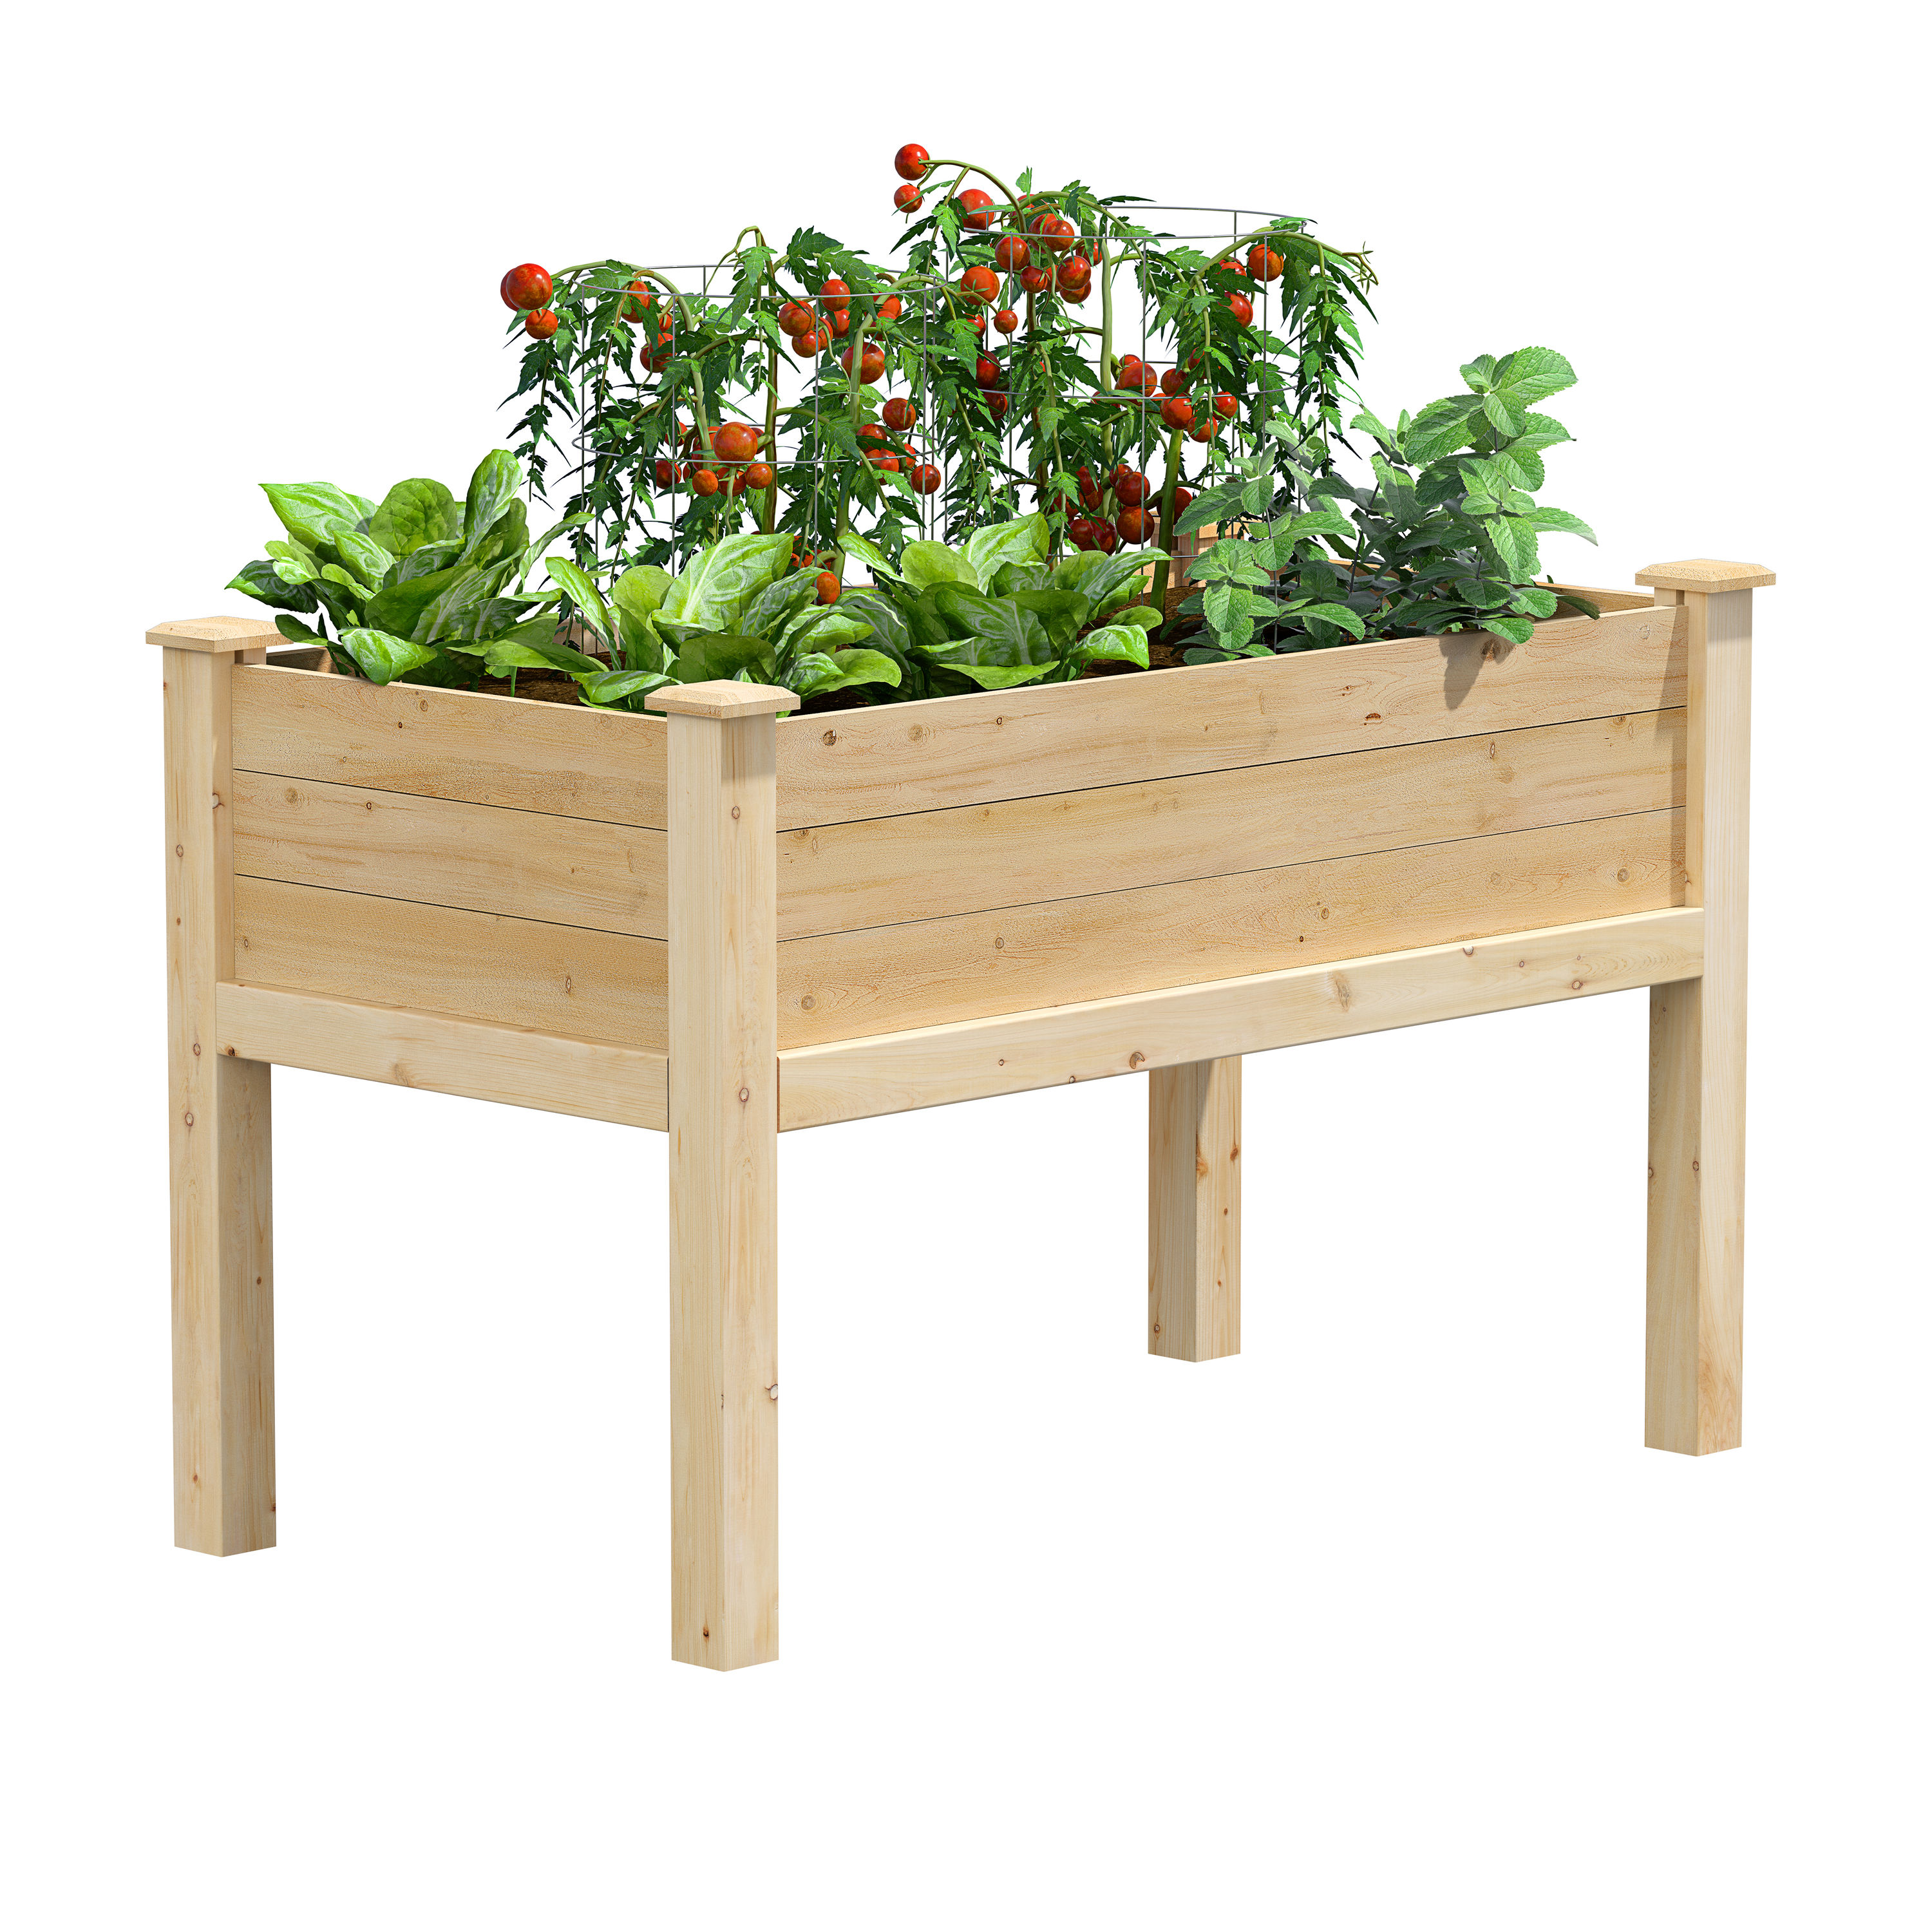 Details about   Cedar Wood Vertical Garden Planter Outdoor Gardening Box Stand Plant Flowers